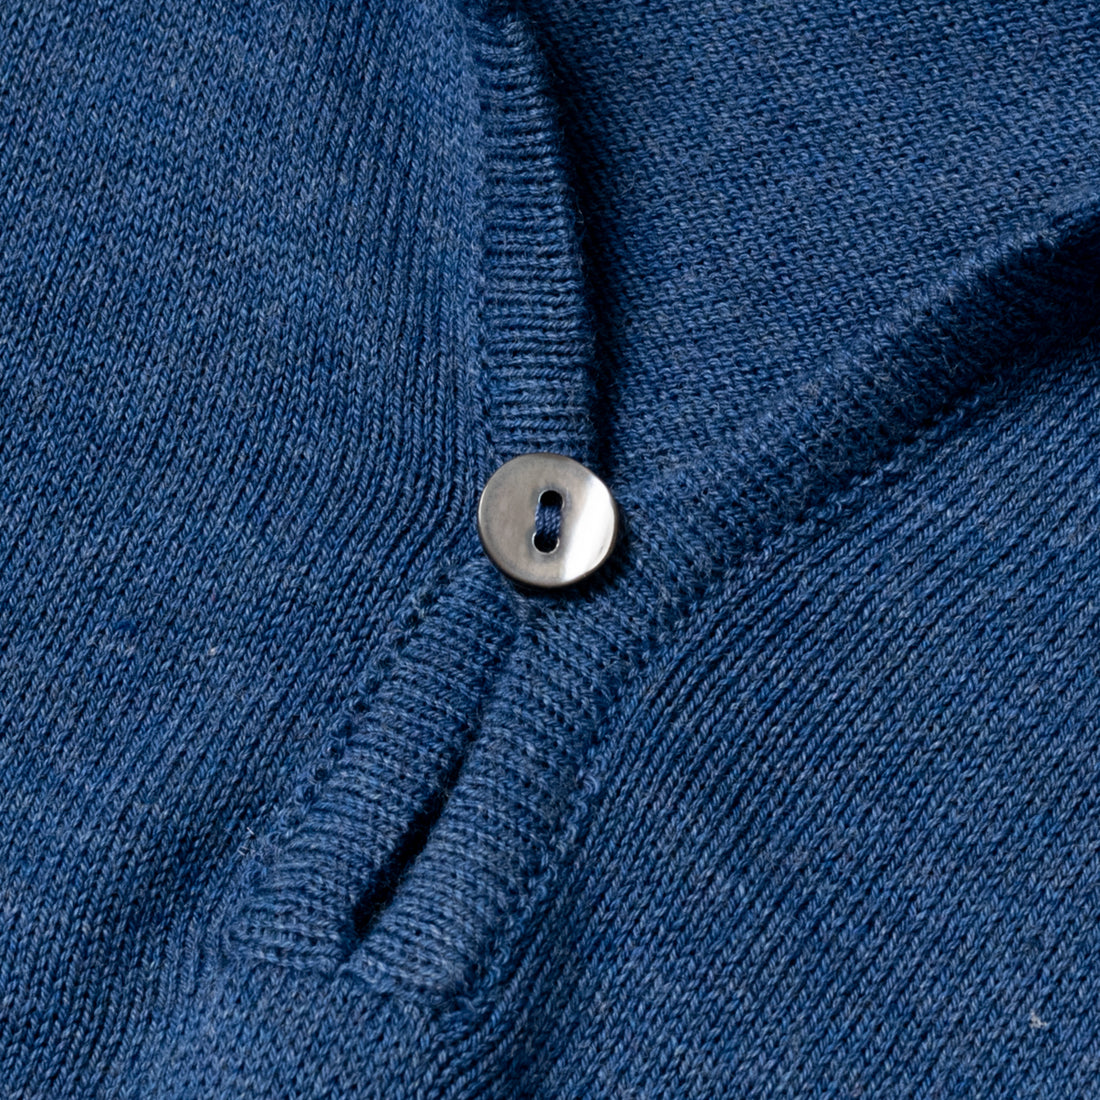 Bryceland's Cotton Short Sleeve ‘Skipper’ Polo Navy